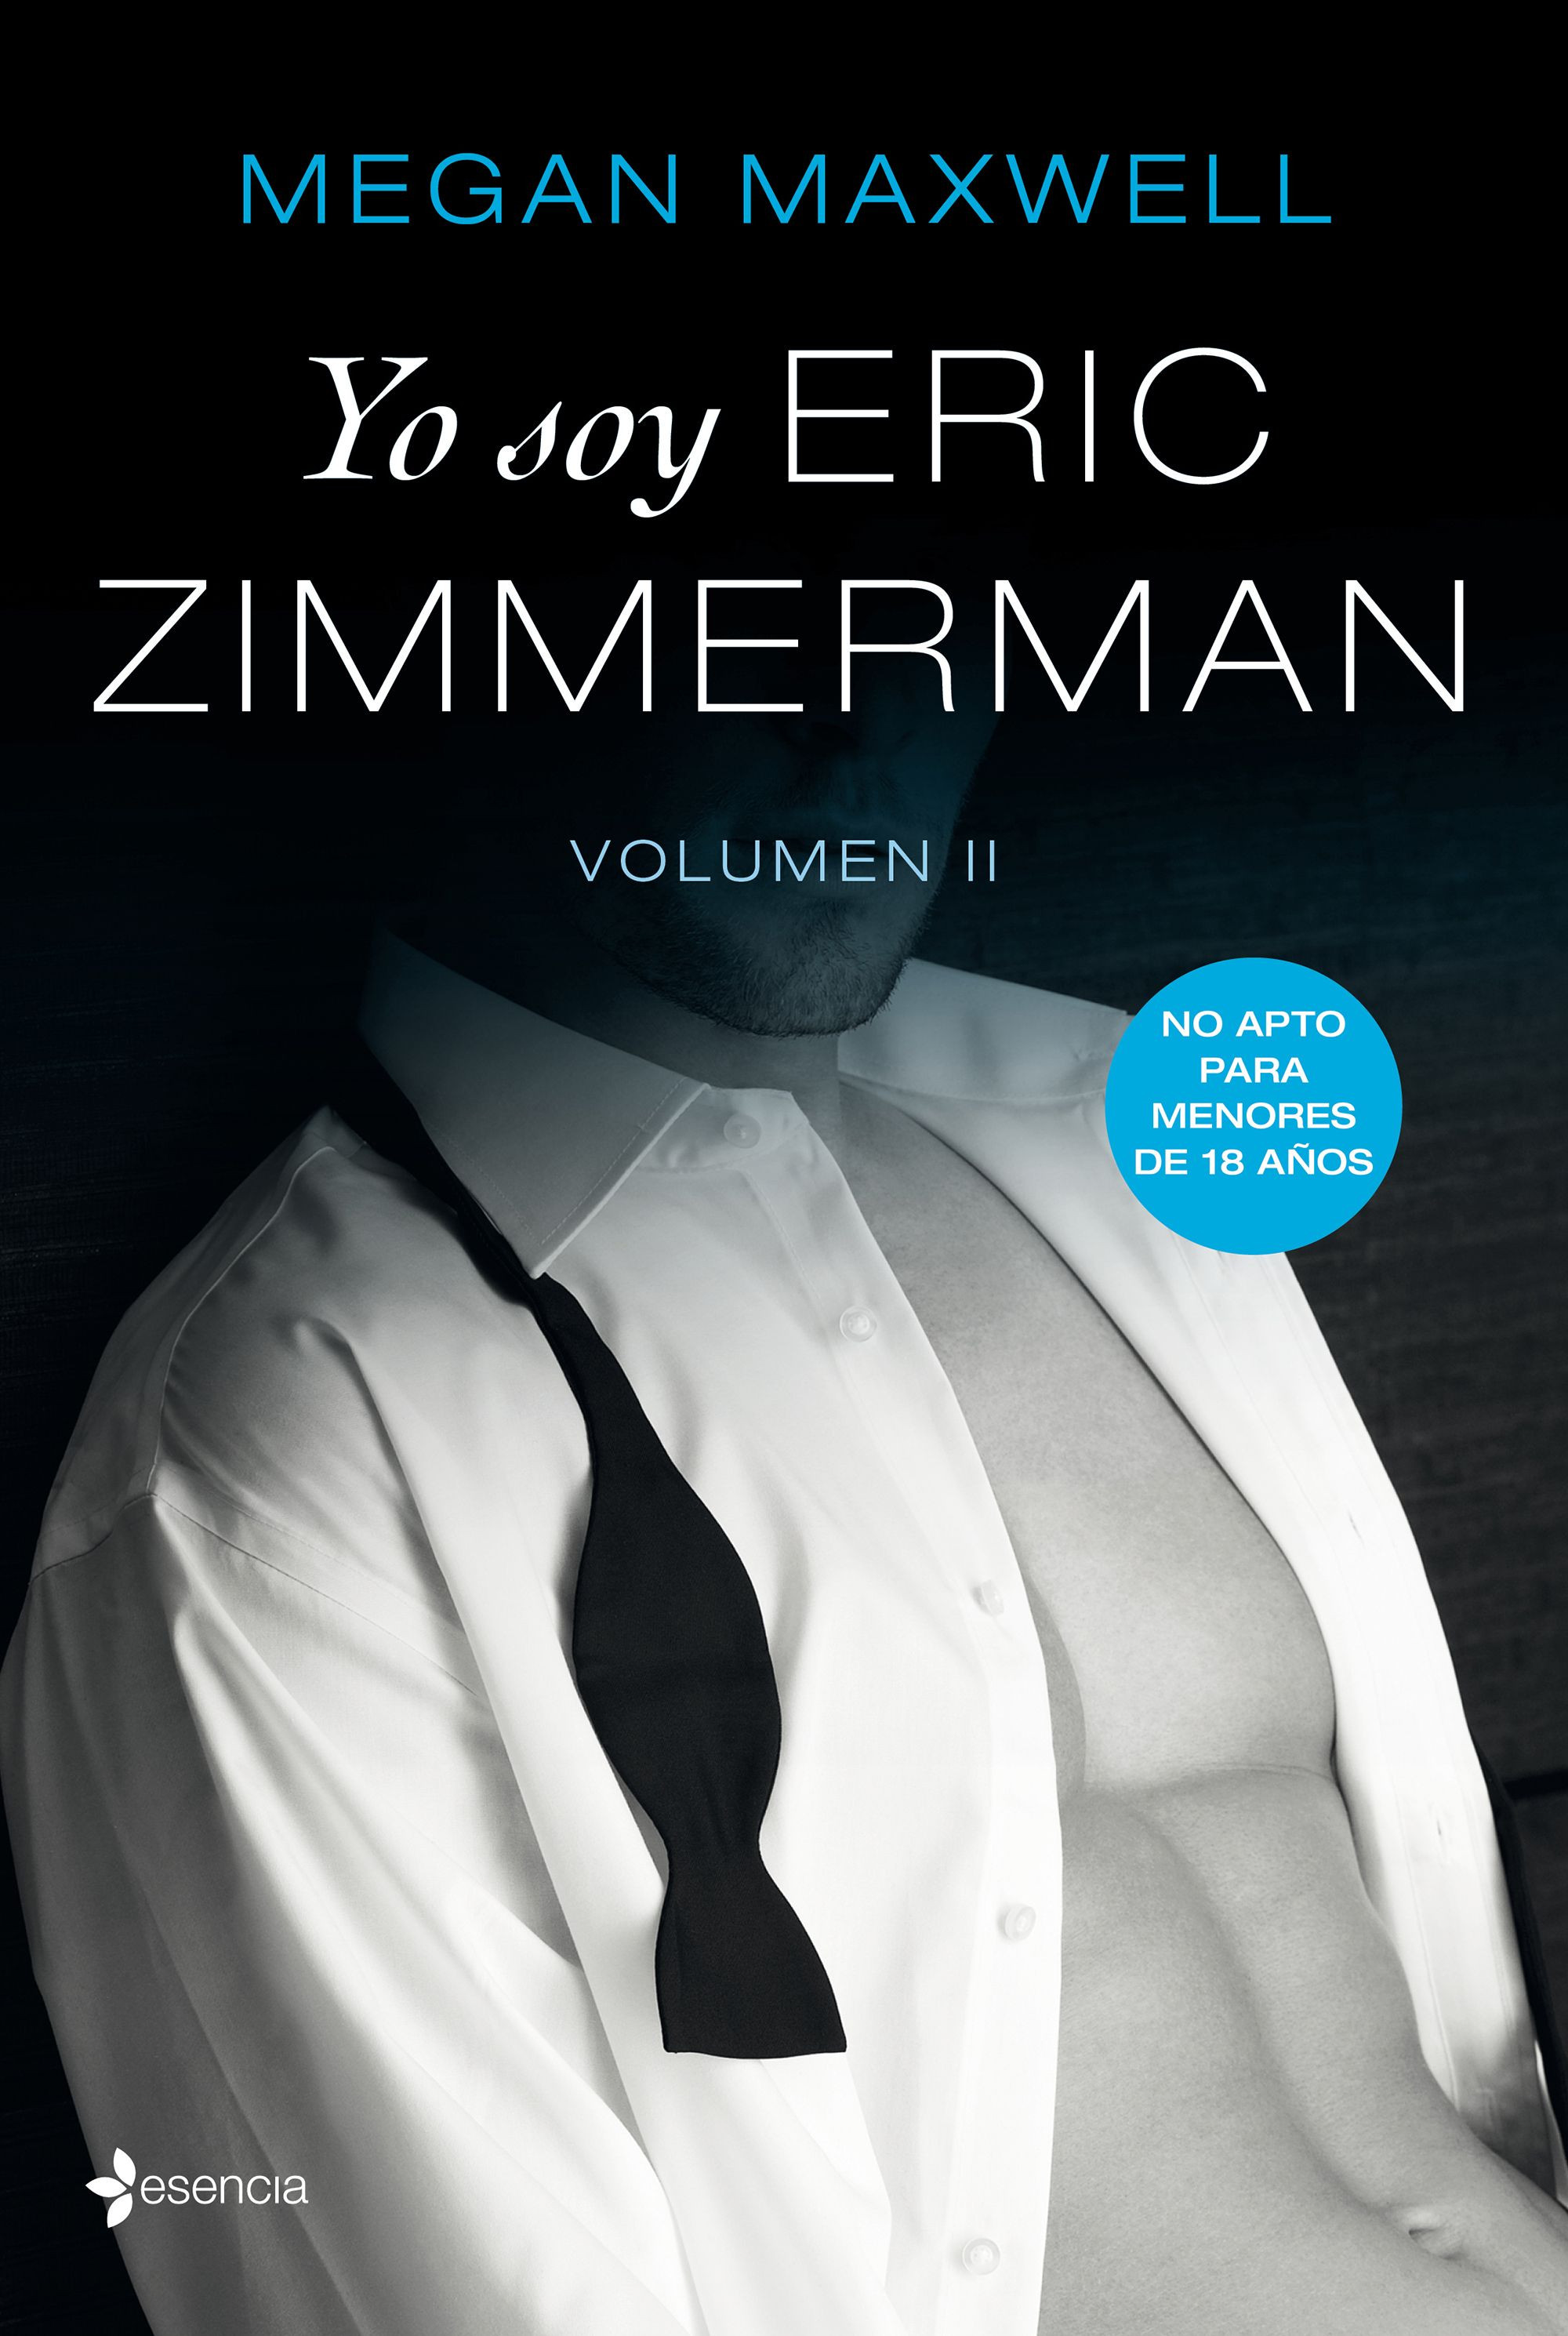 Imagen Yo soy Eric Zimmerman. Volumen II. Megan Maxwell